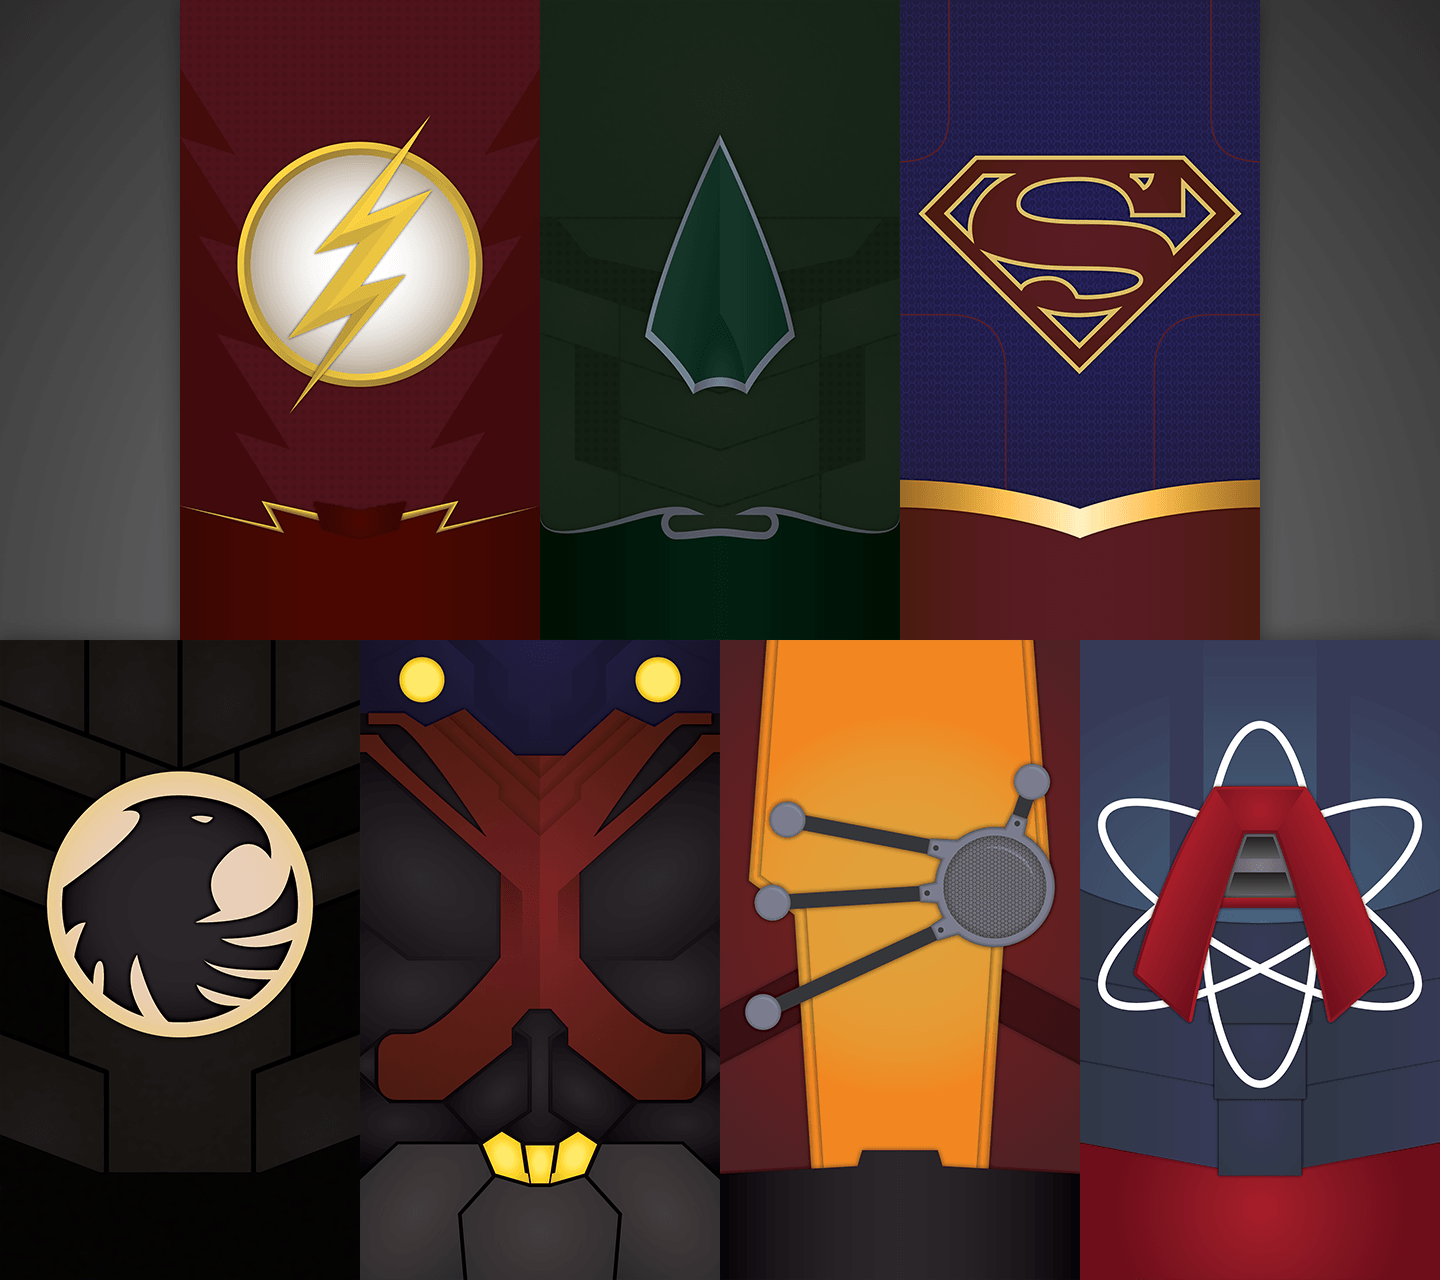 So I made a CW Justice League wallpaper set